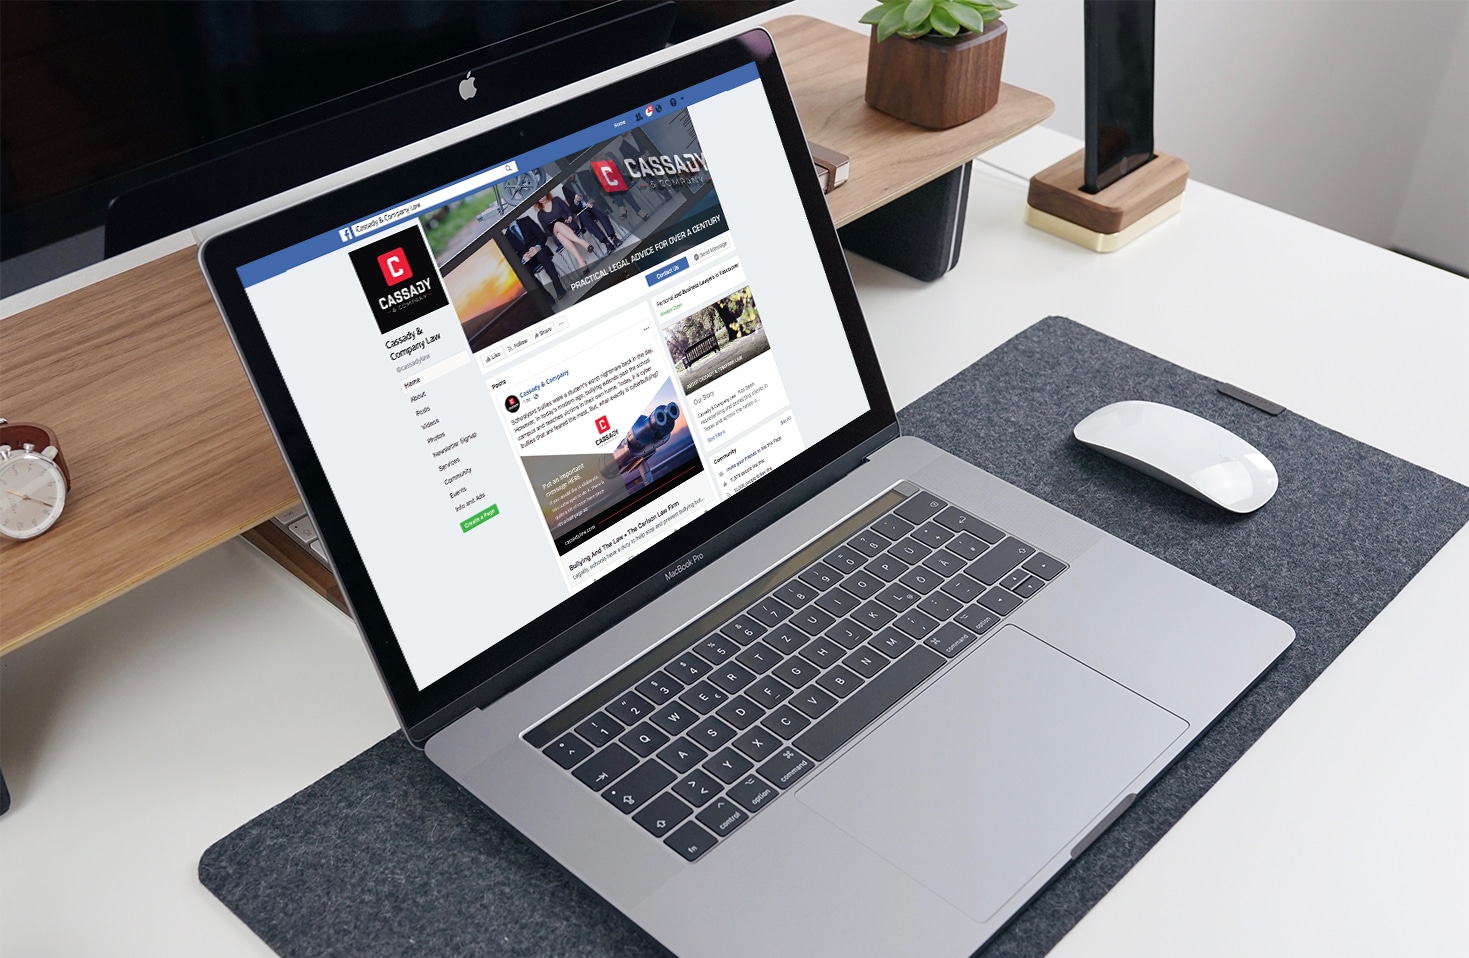 Cassady & Company Facebook page displayed on a laptop